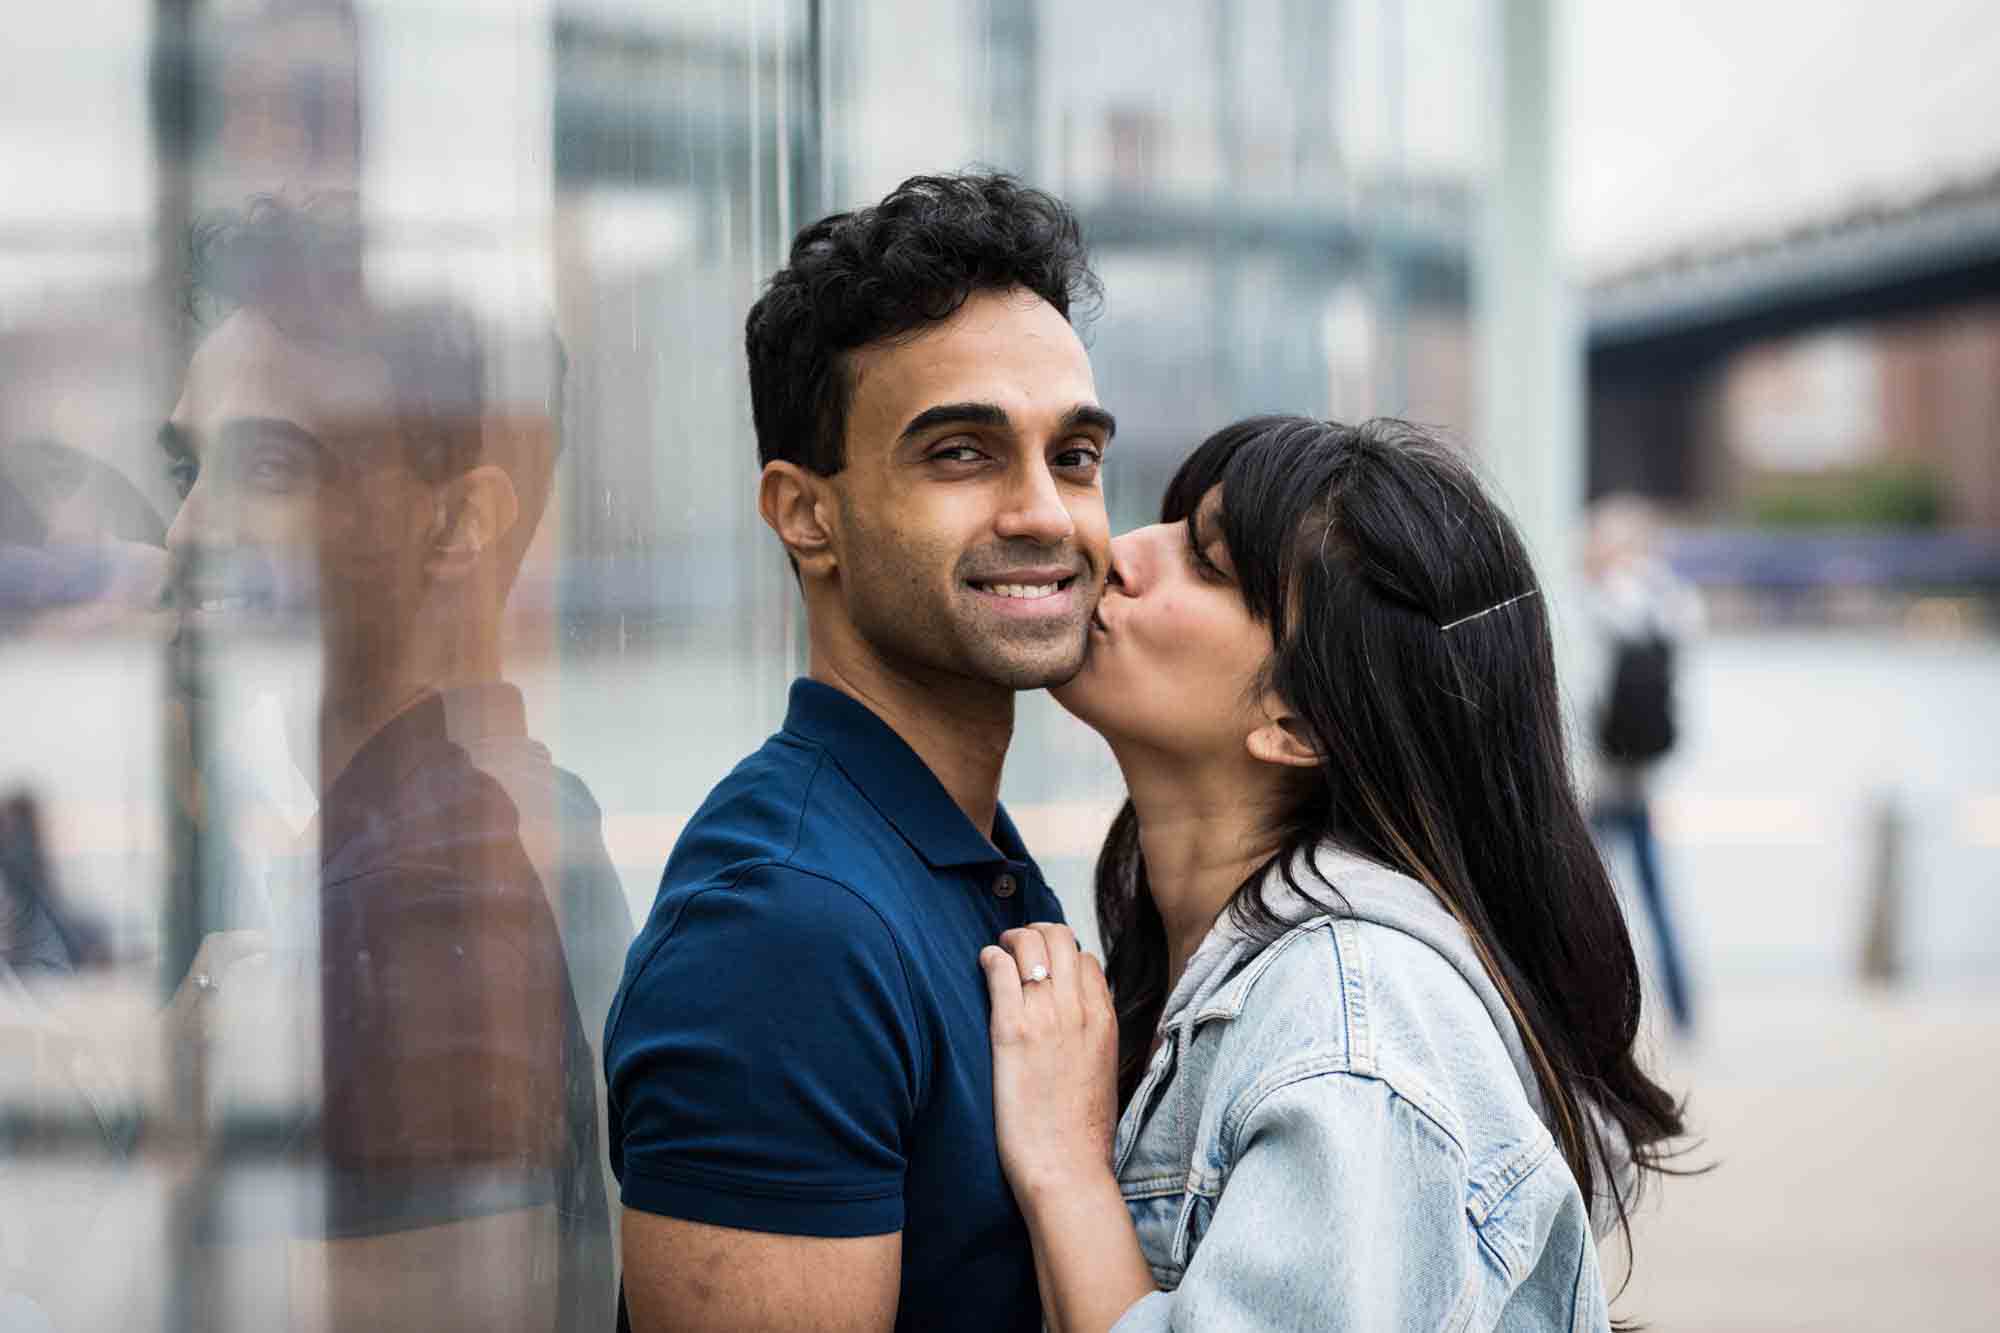 Brooklyn Bridge Park engagement photo of woman kissing man on the cheek against glass wall